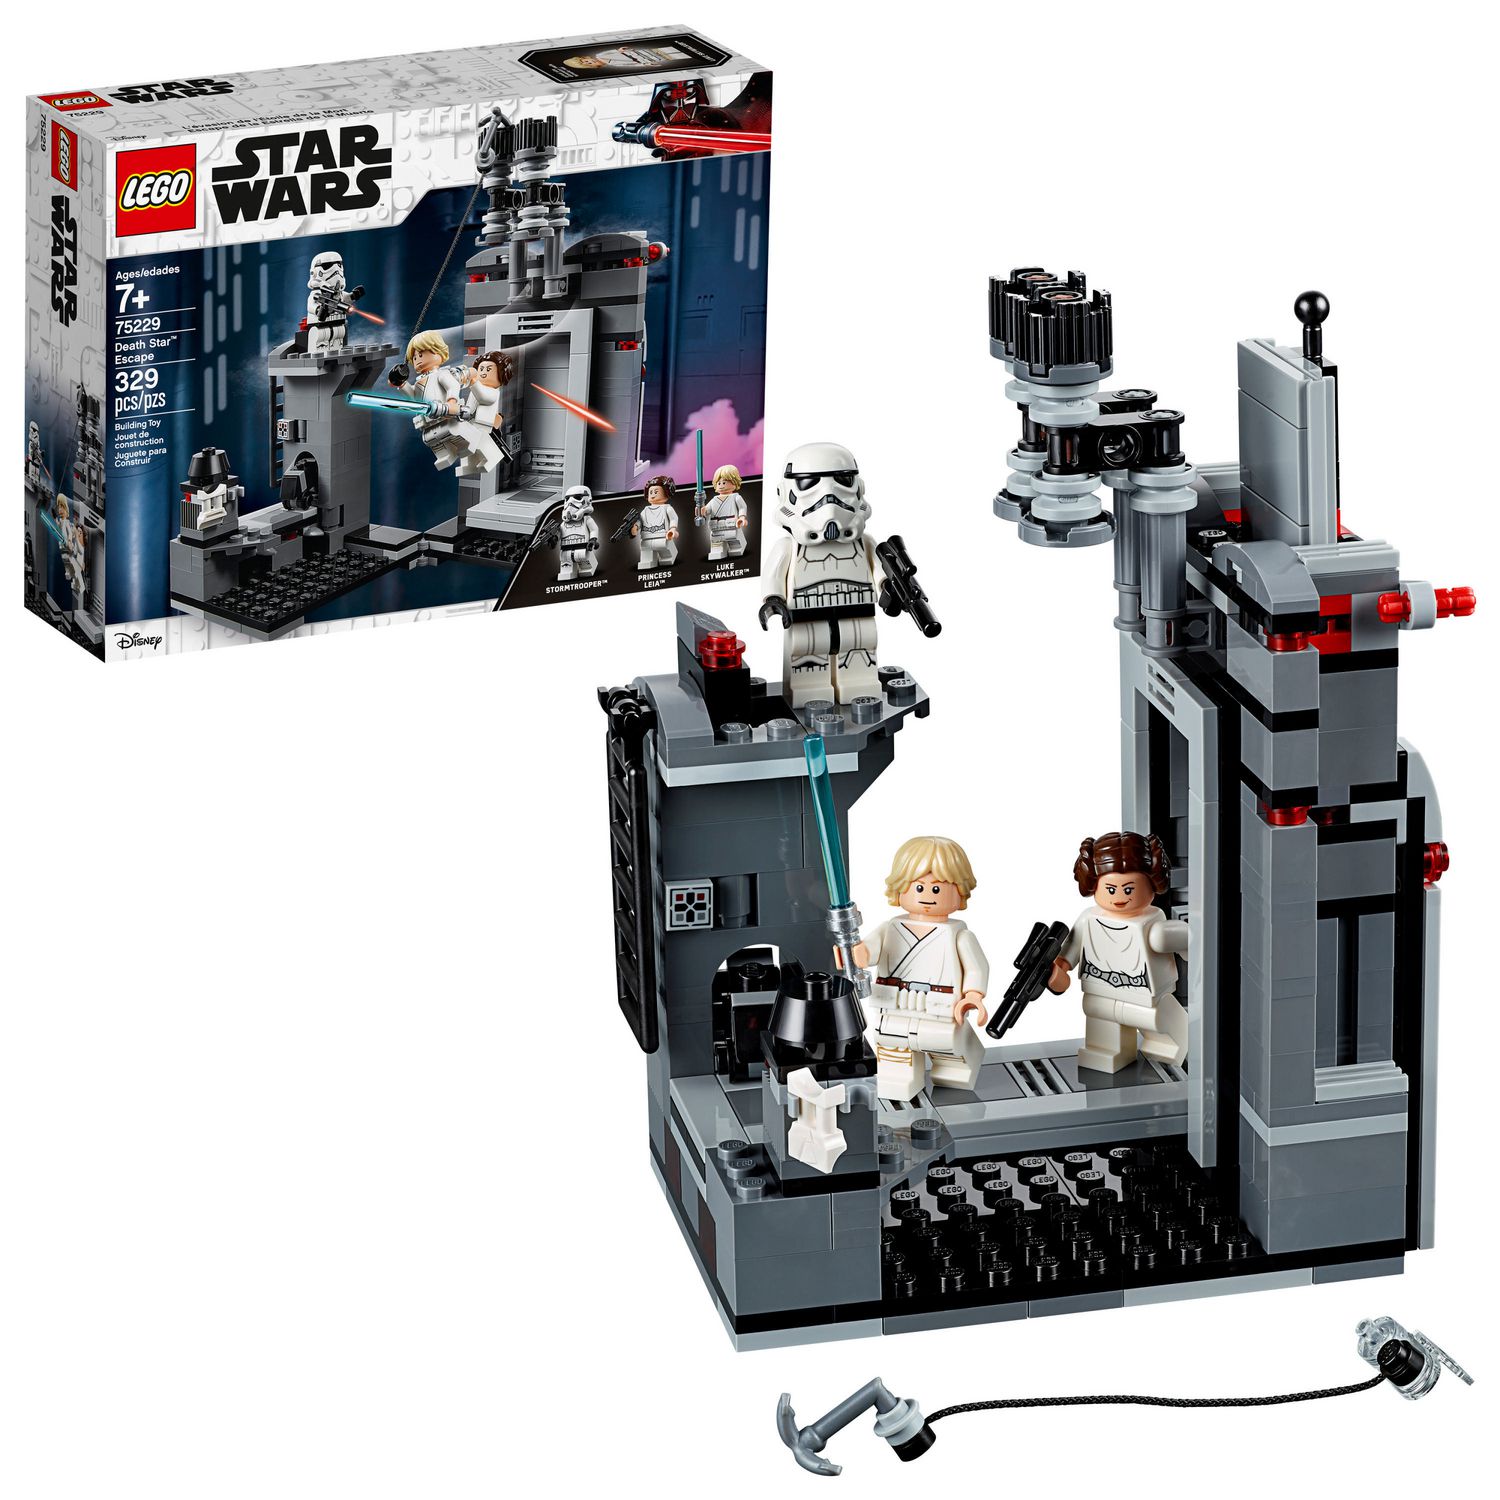 New Lego Starwars Death Star Droid Minifigures Figure Building Blocks Toys 